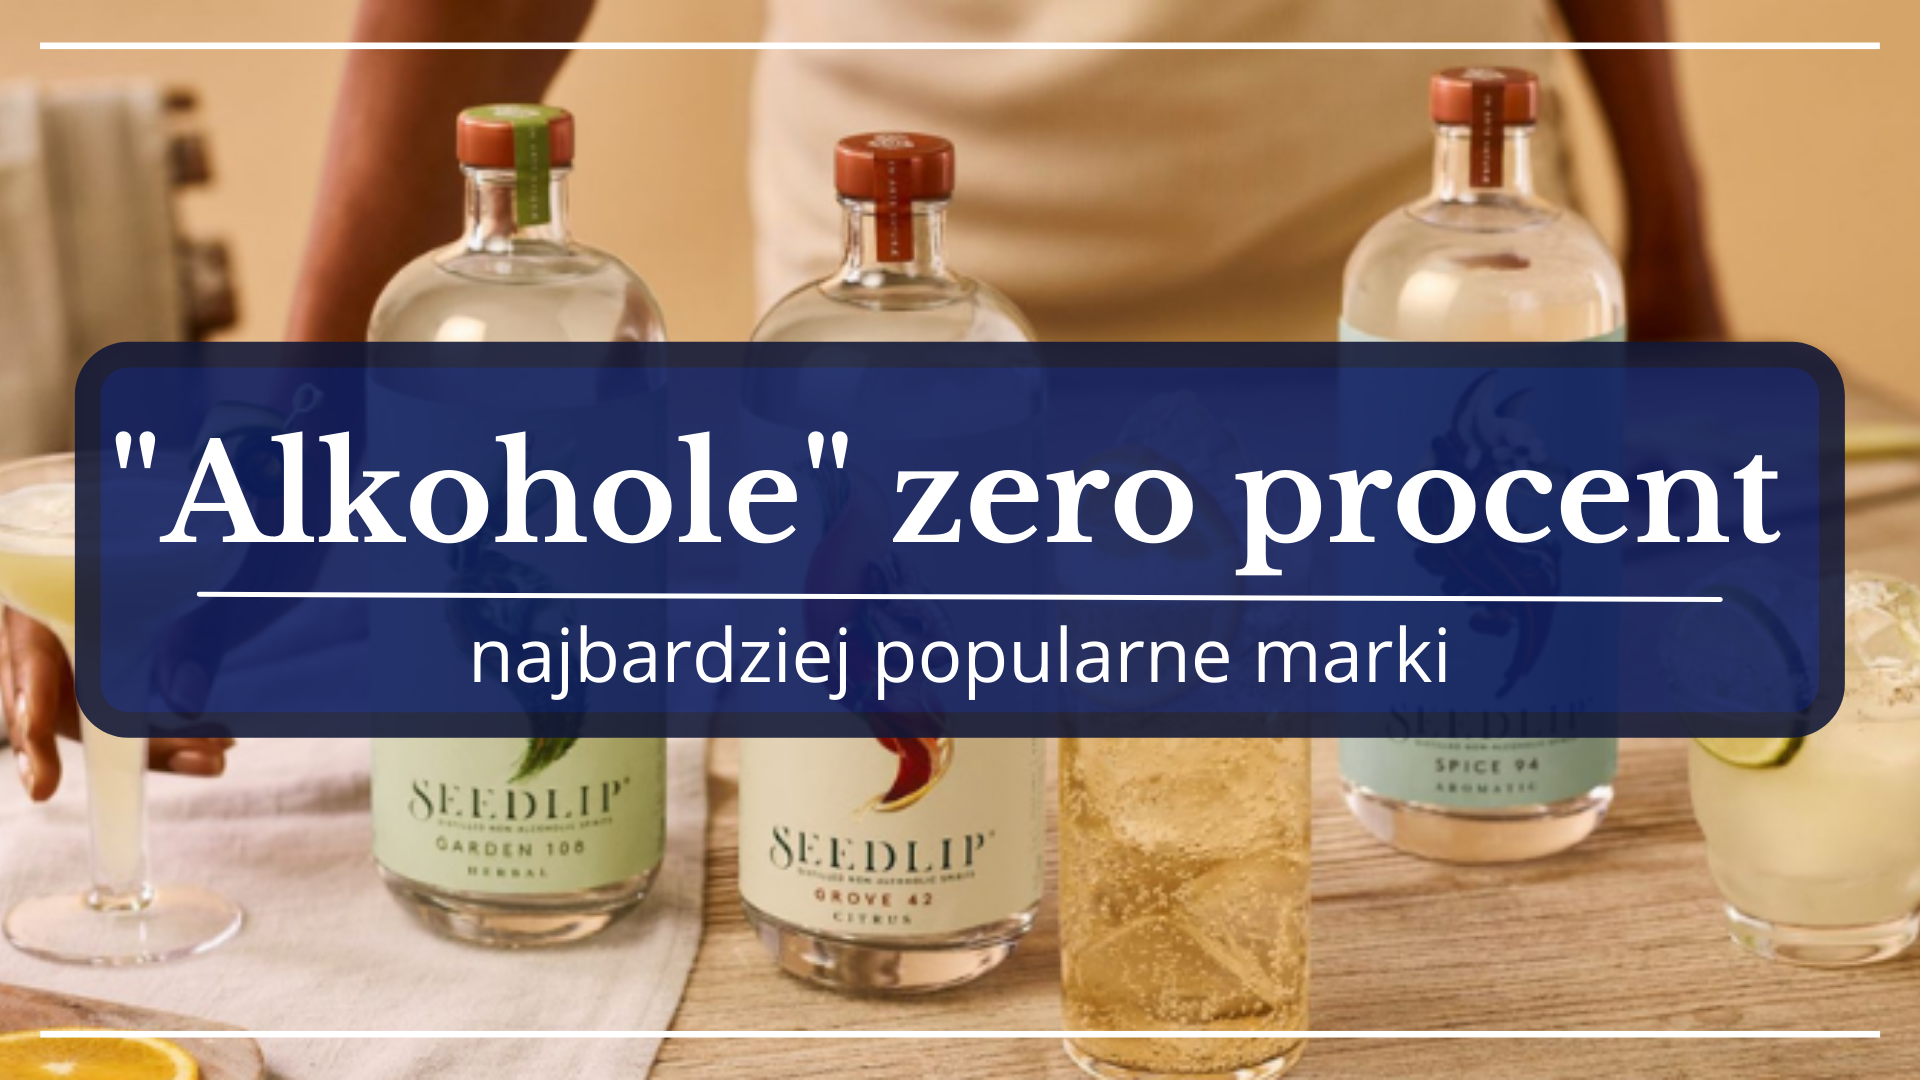 Popularne marki “alkoholi” zero procent